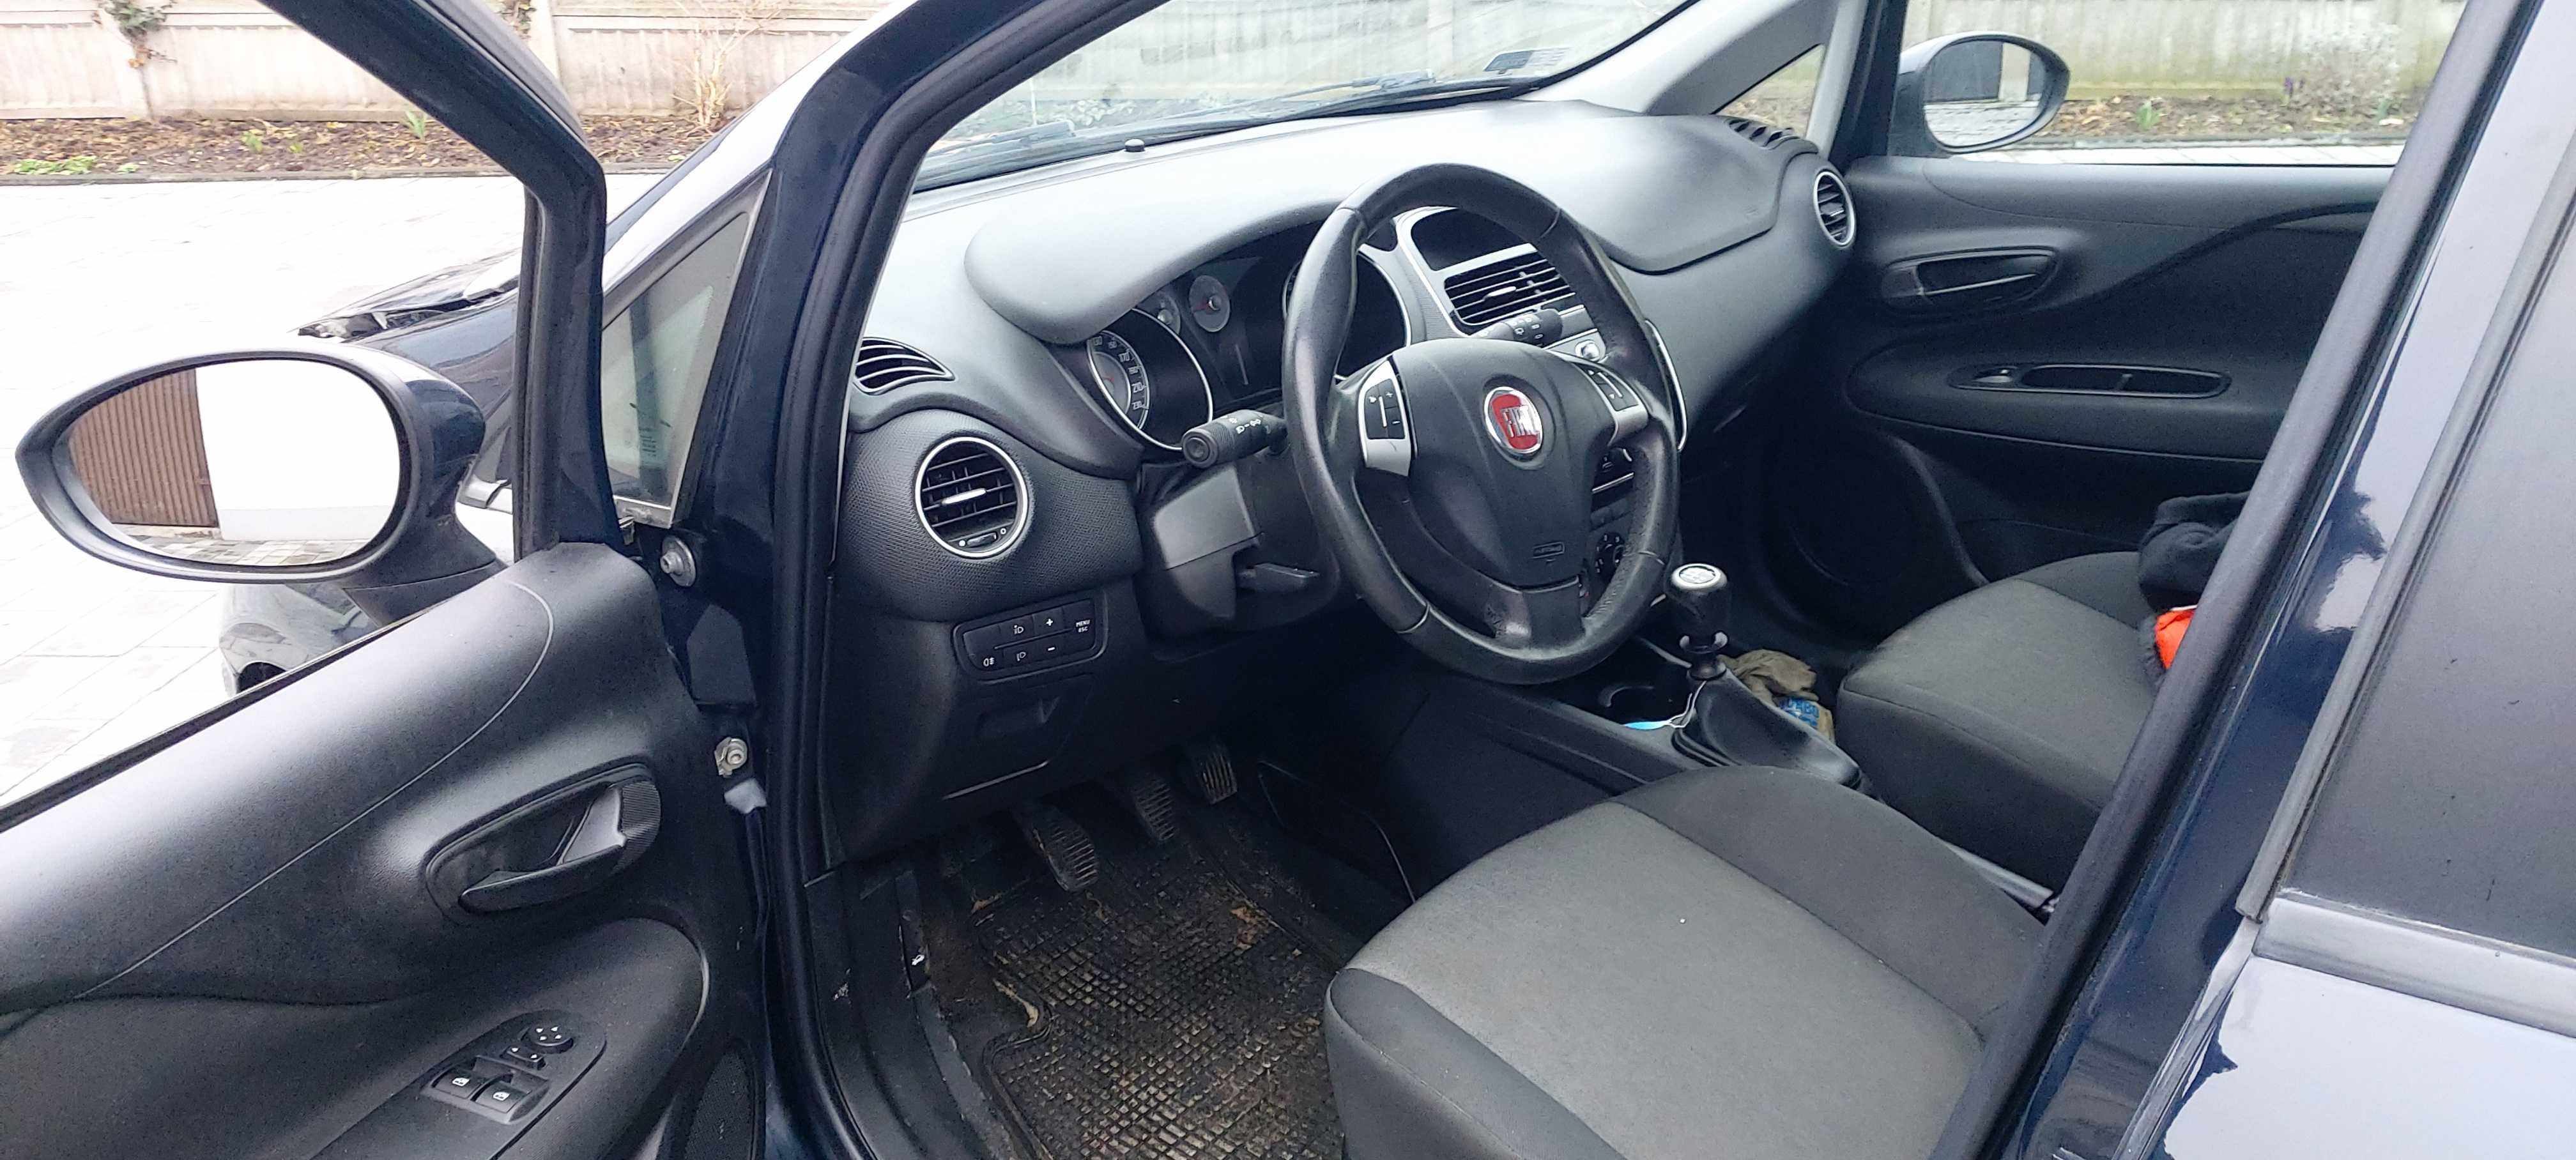 Fiat Punto 1.4 benzyna 2014r